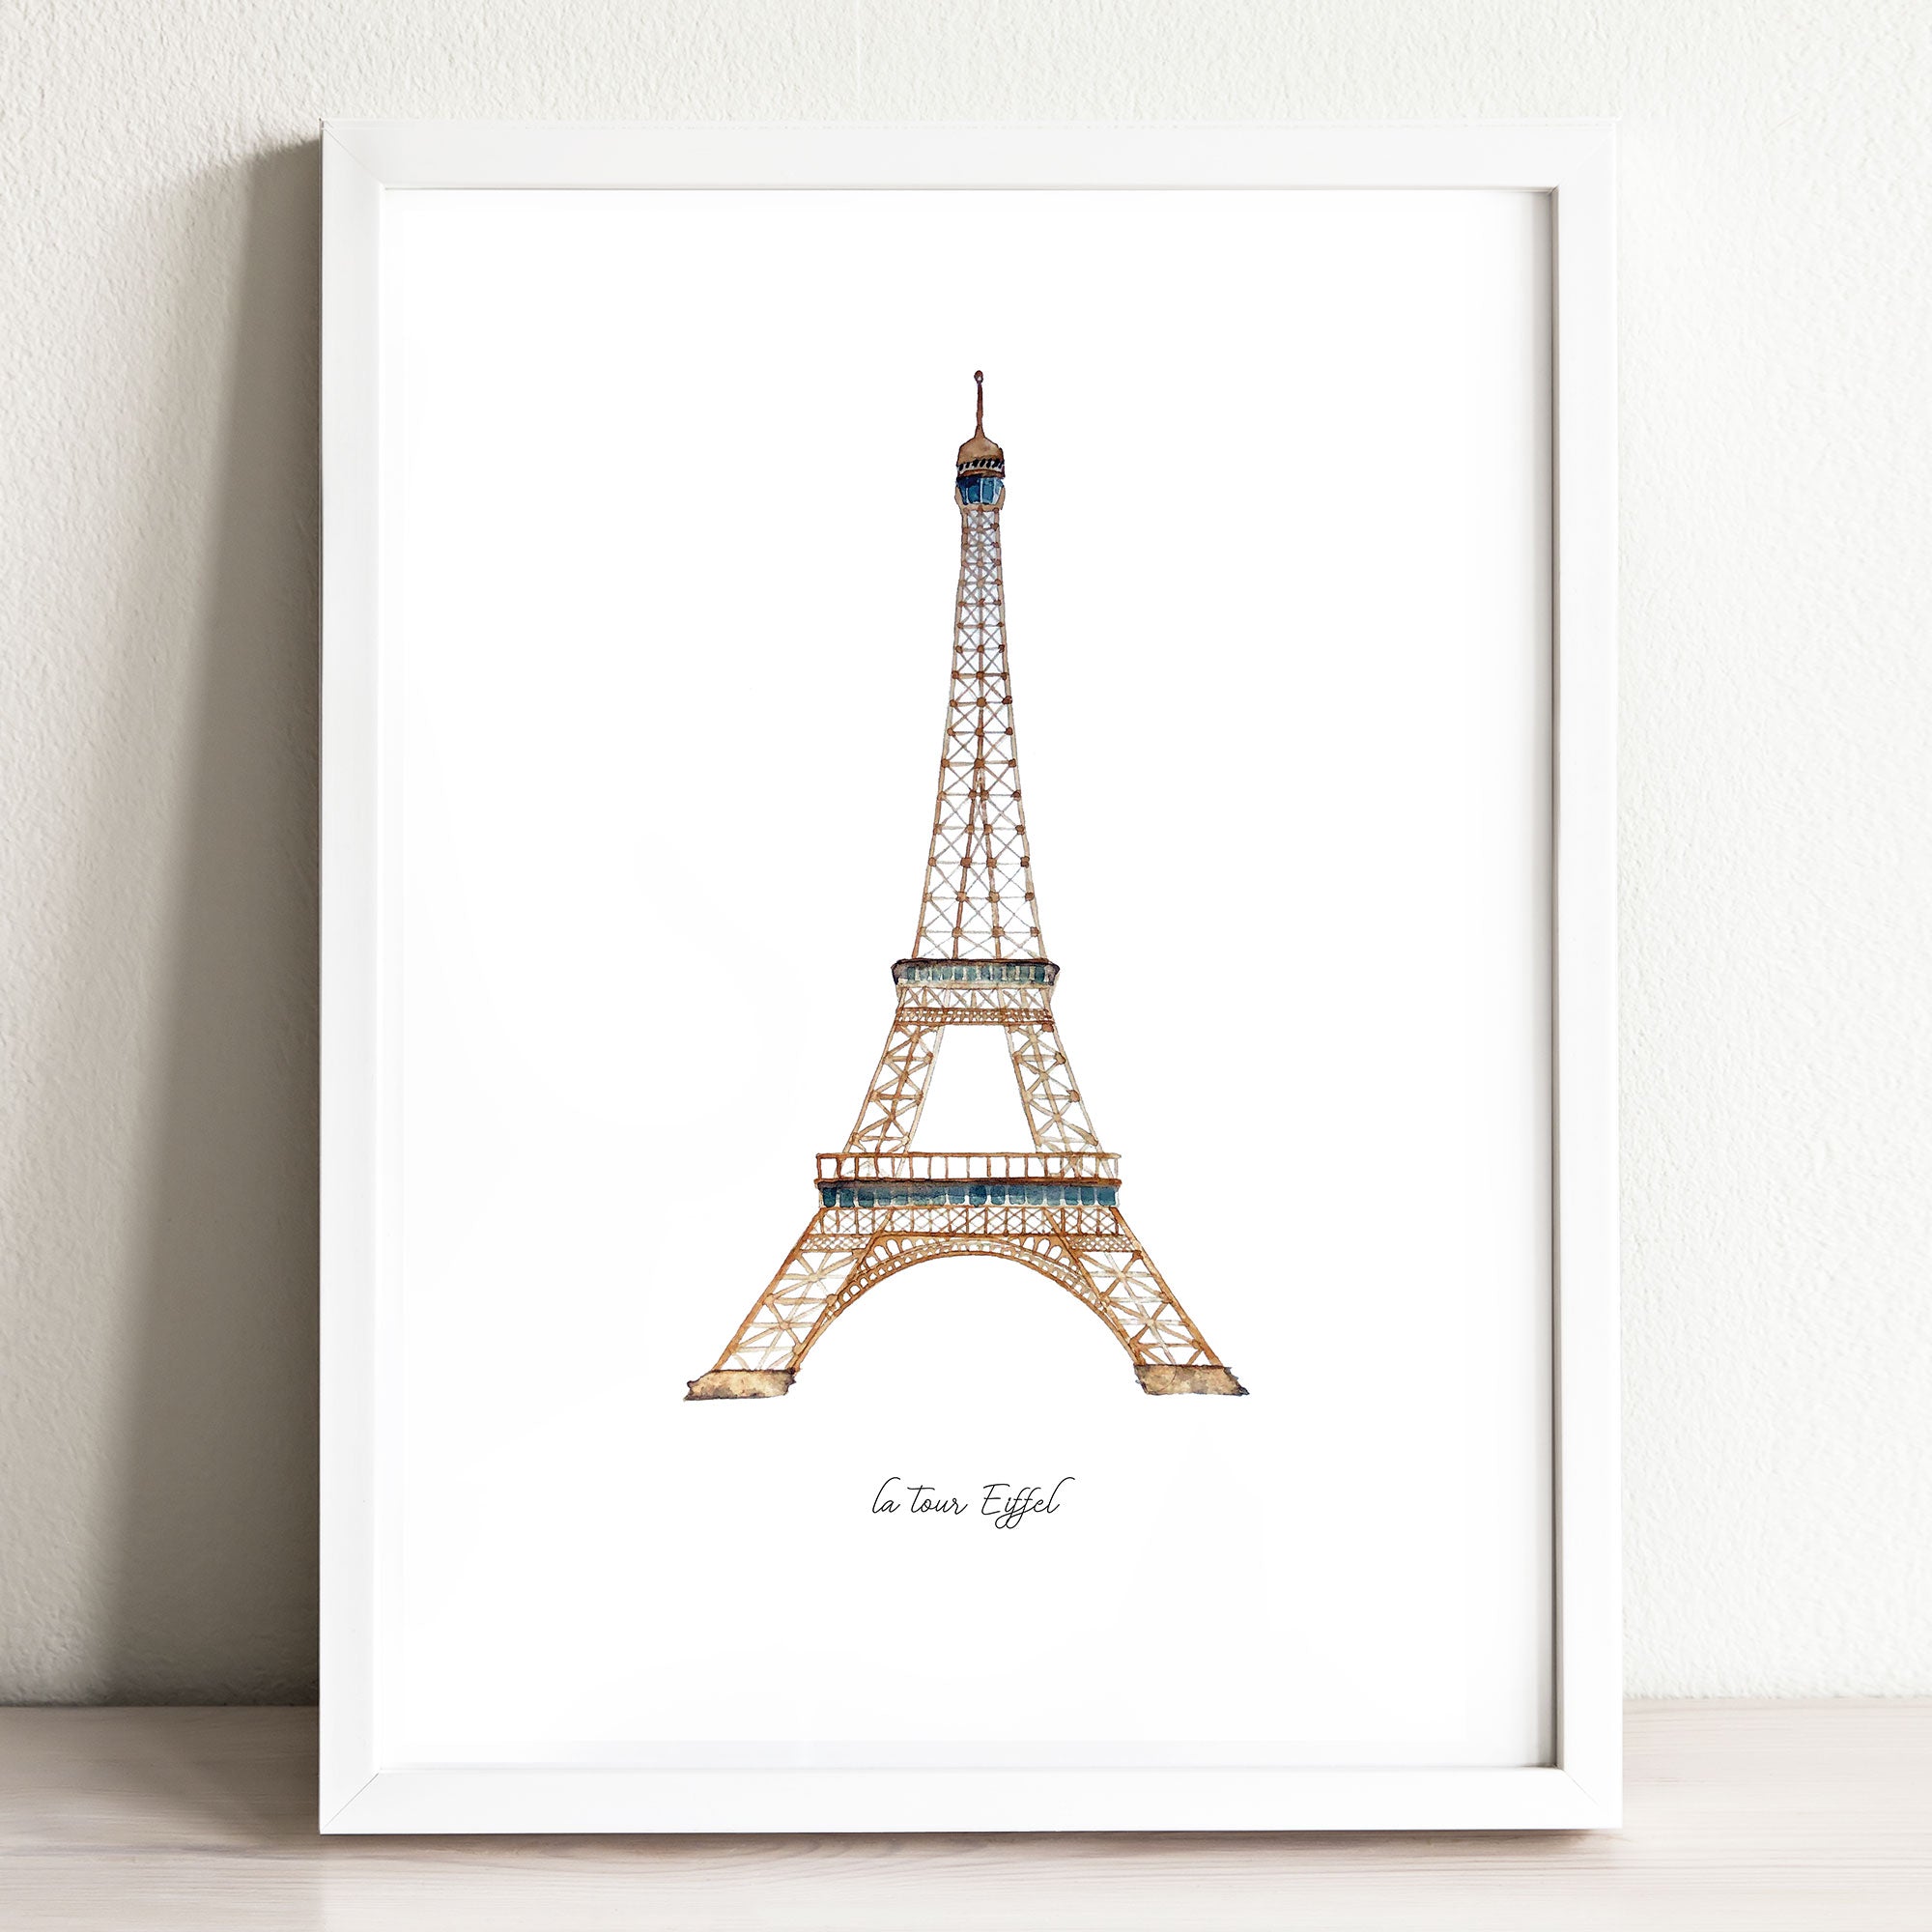 Eiffel Tower 1922  Robert Delaunay  Gallery quality art prints  The  Trumpet Shop Vintage Prints